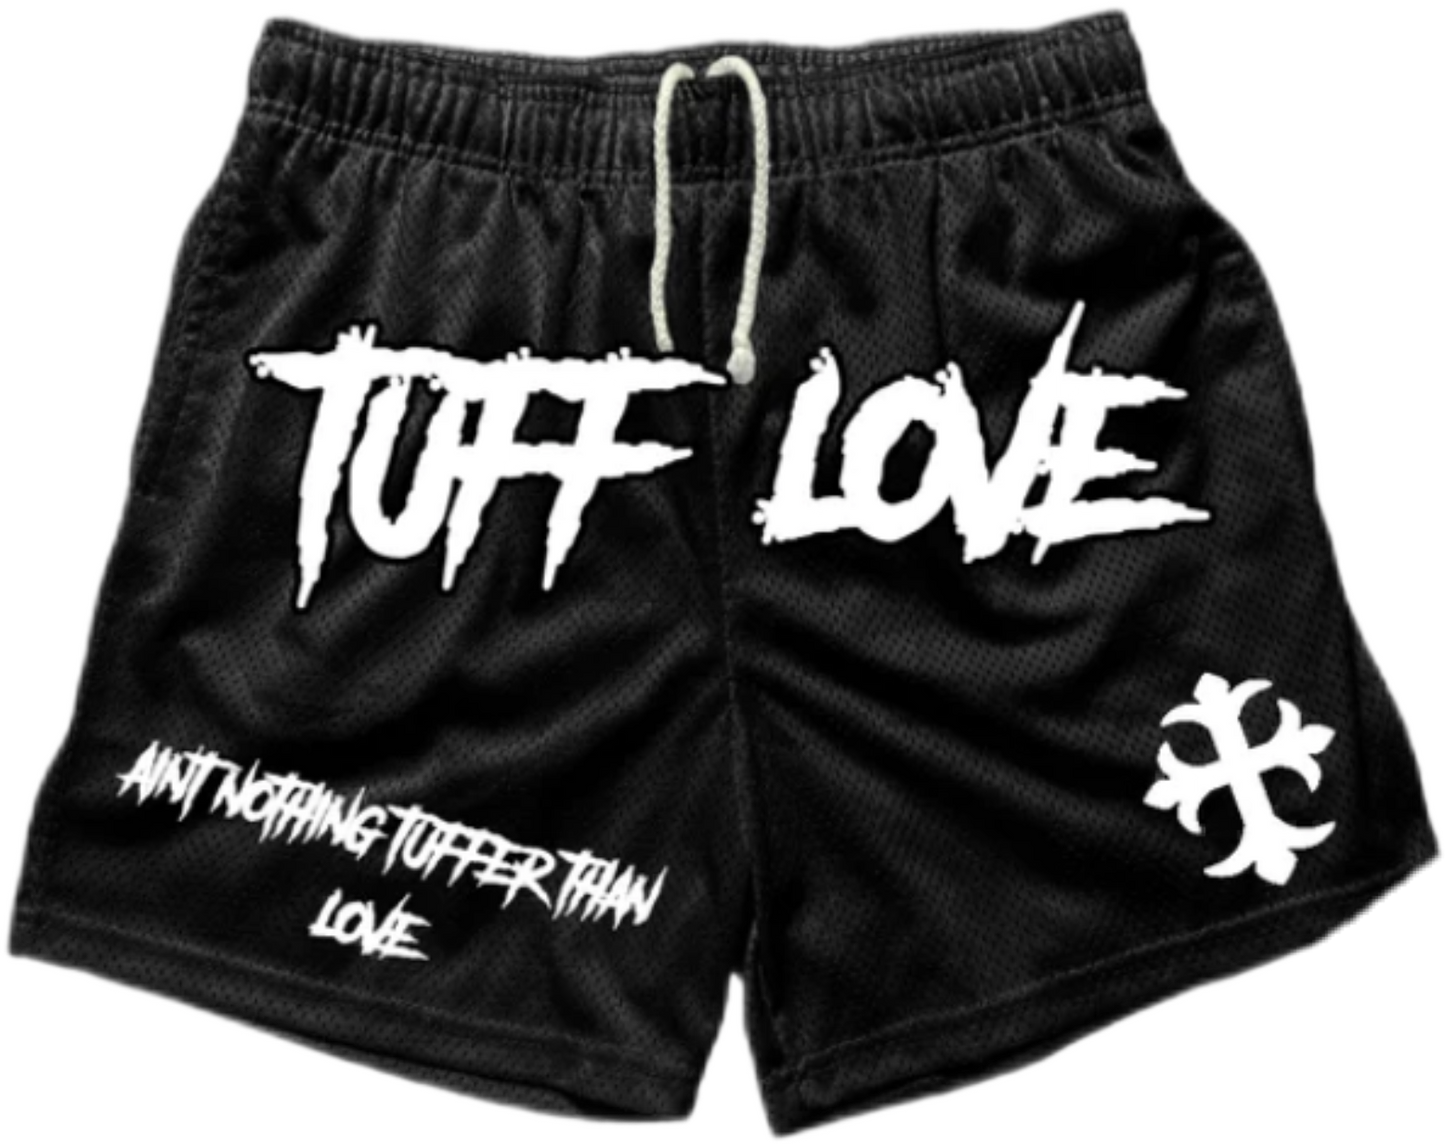 Black/White TuffLove Cross Shorts